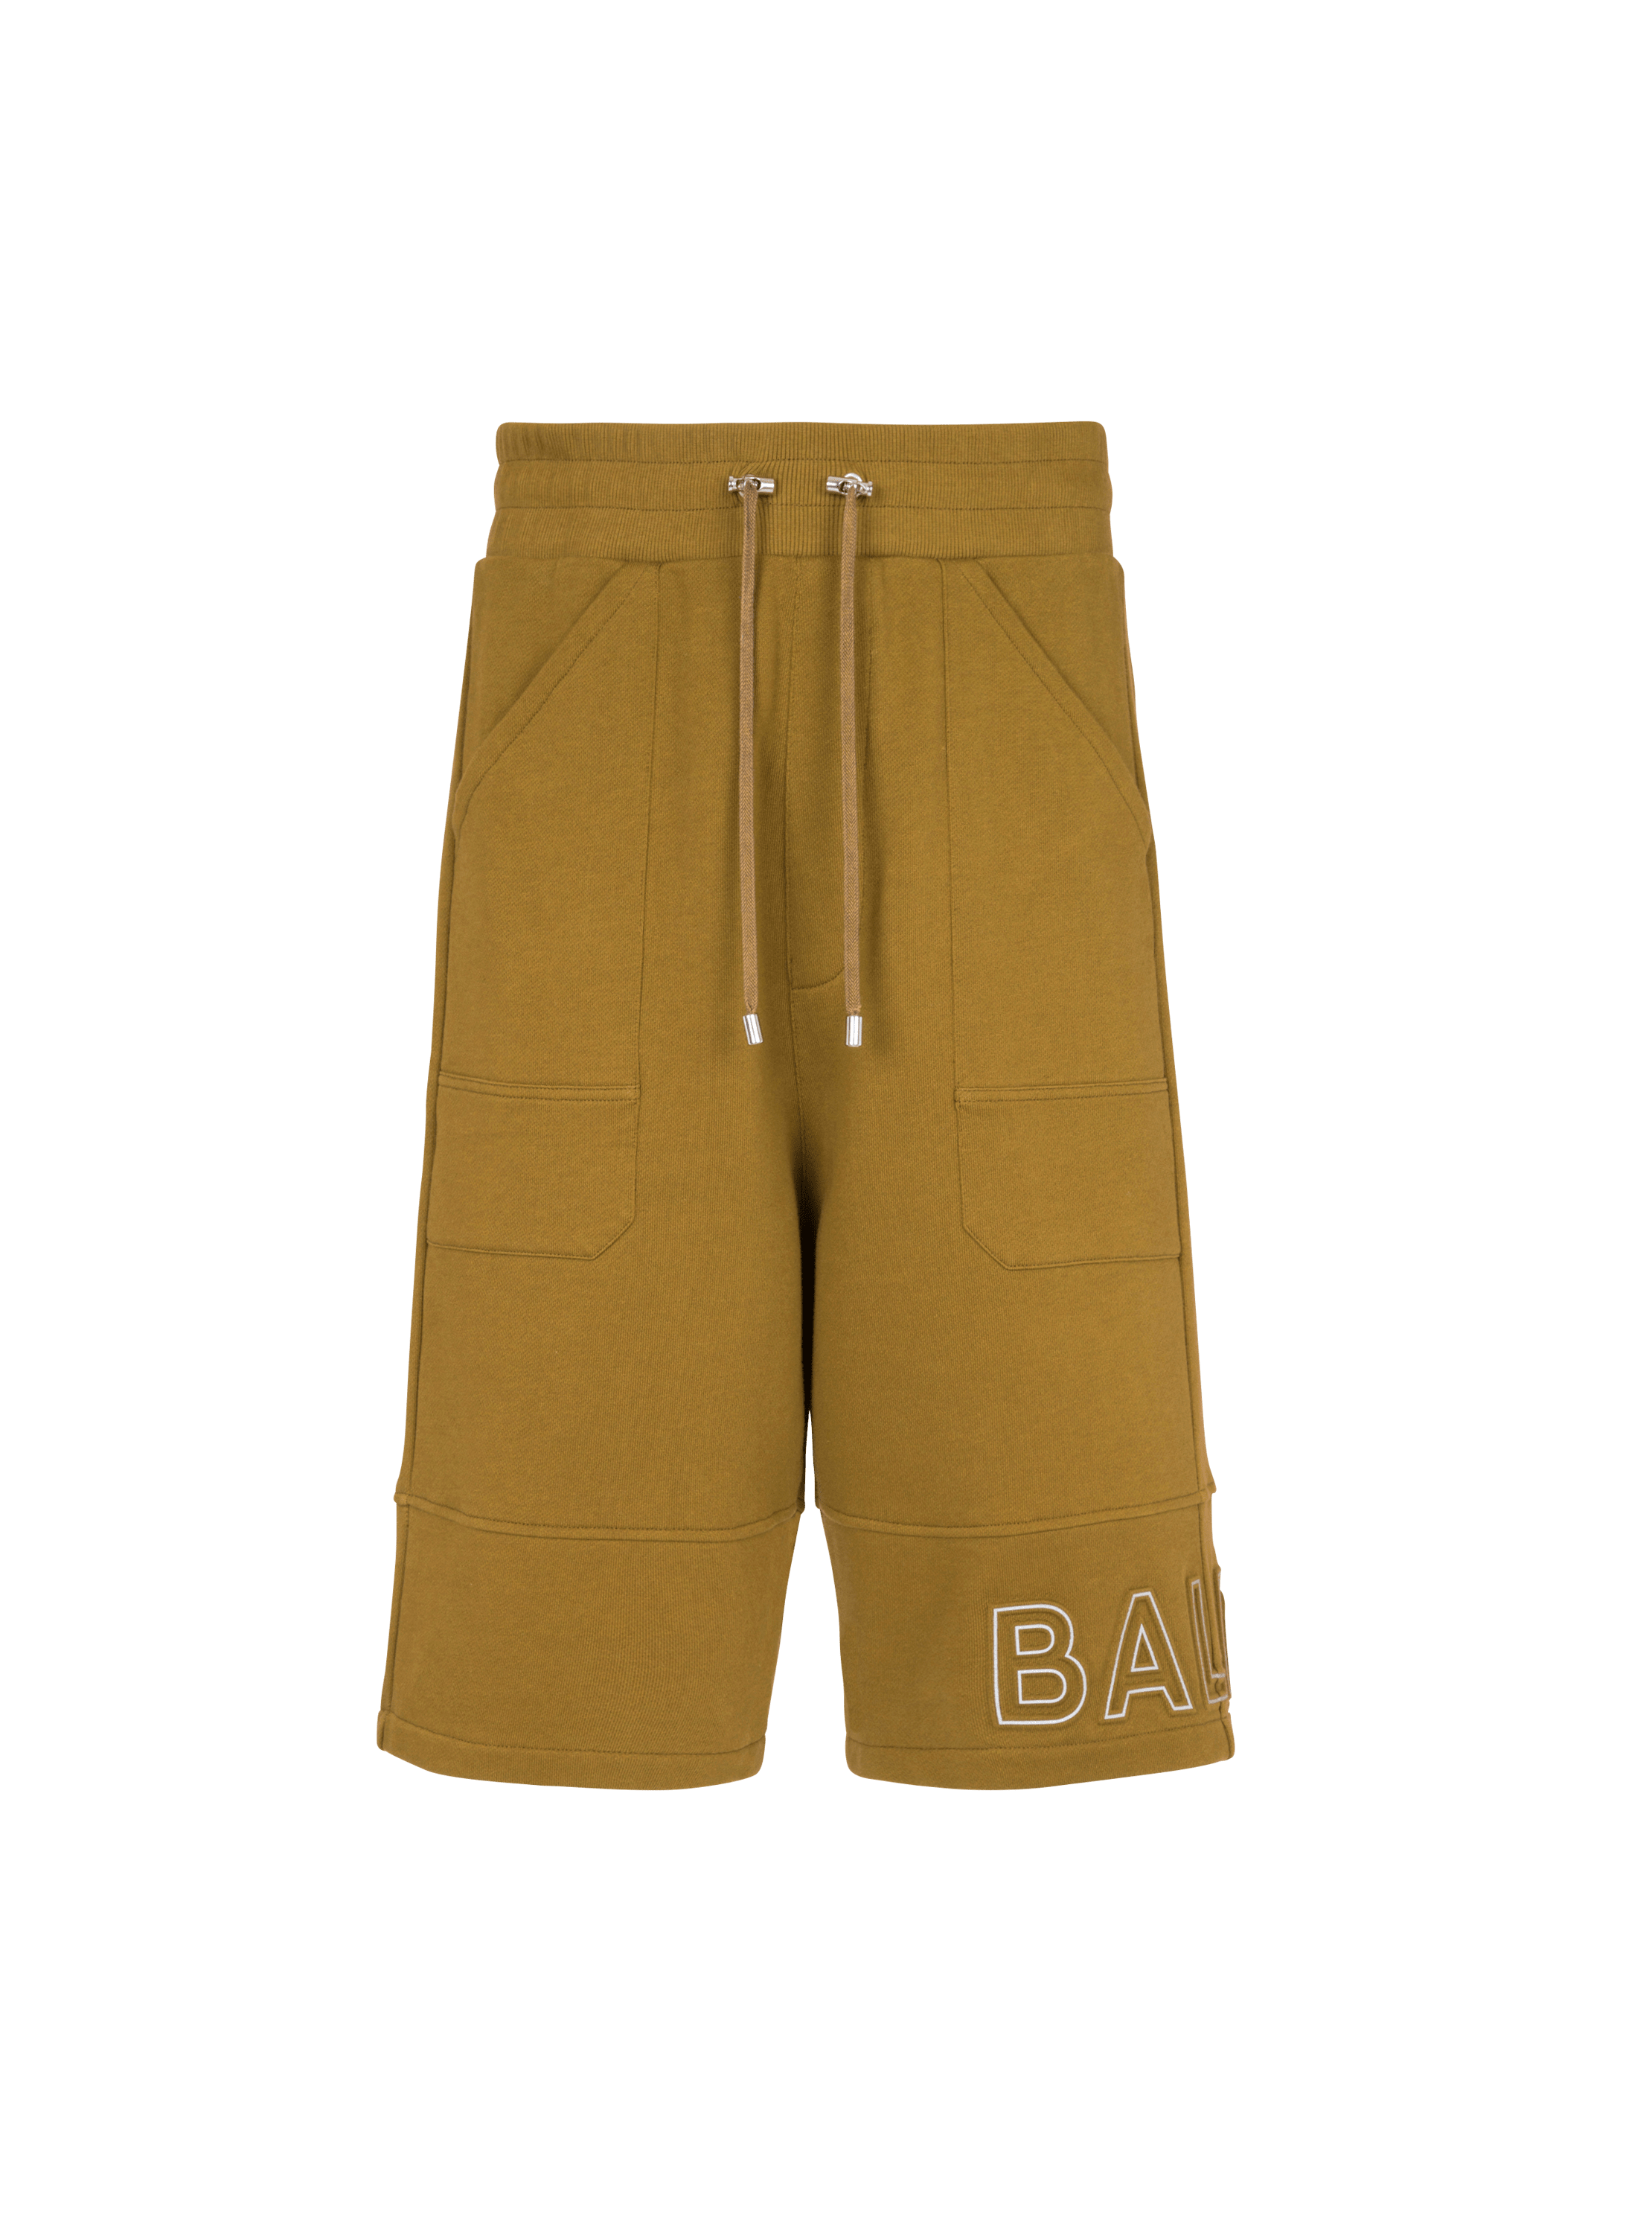 Bermuda shorts in eco-responsible cotton with reflective Balmain logo, khaki, hi-res